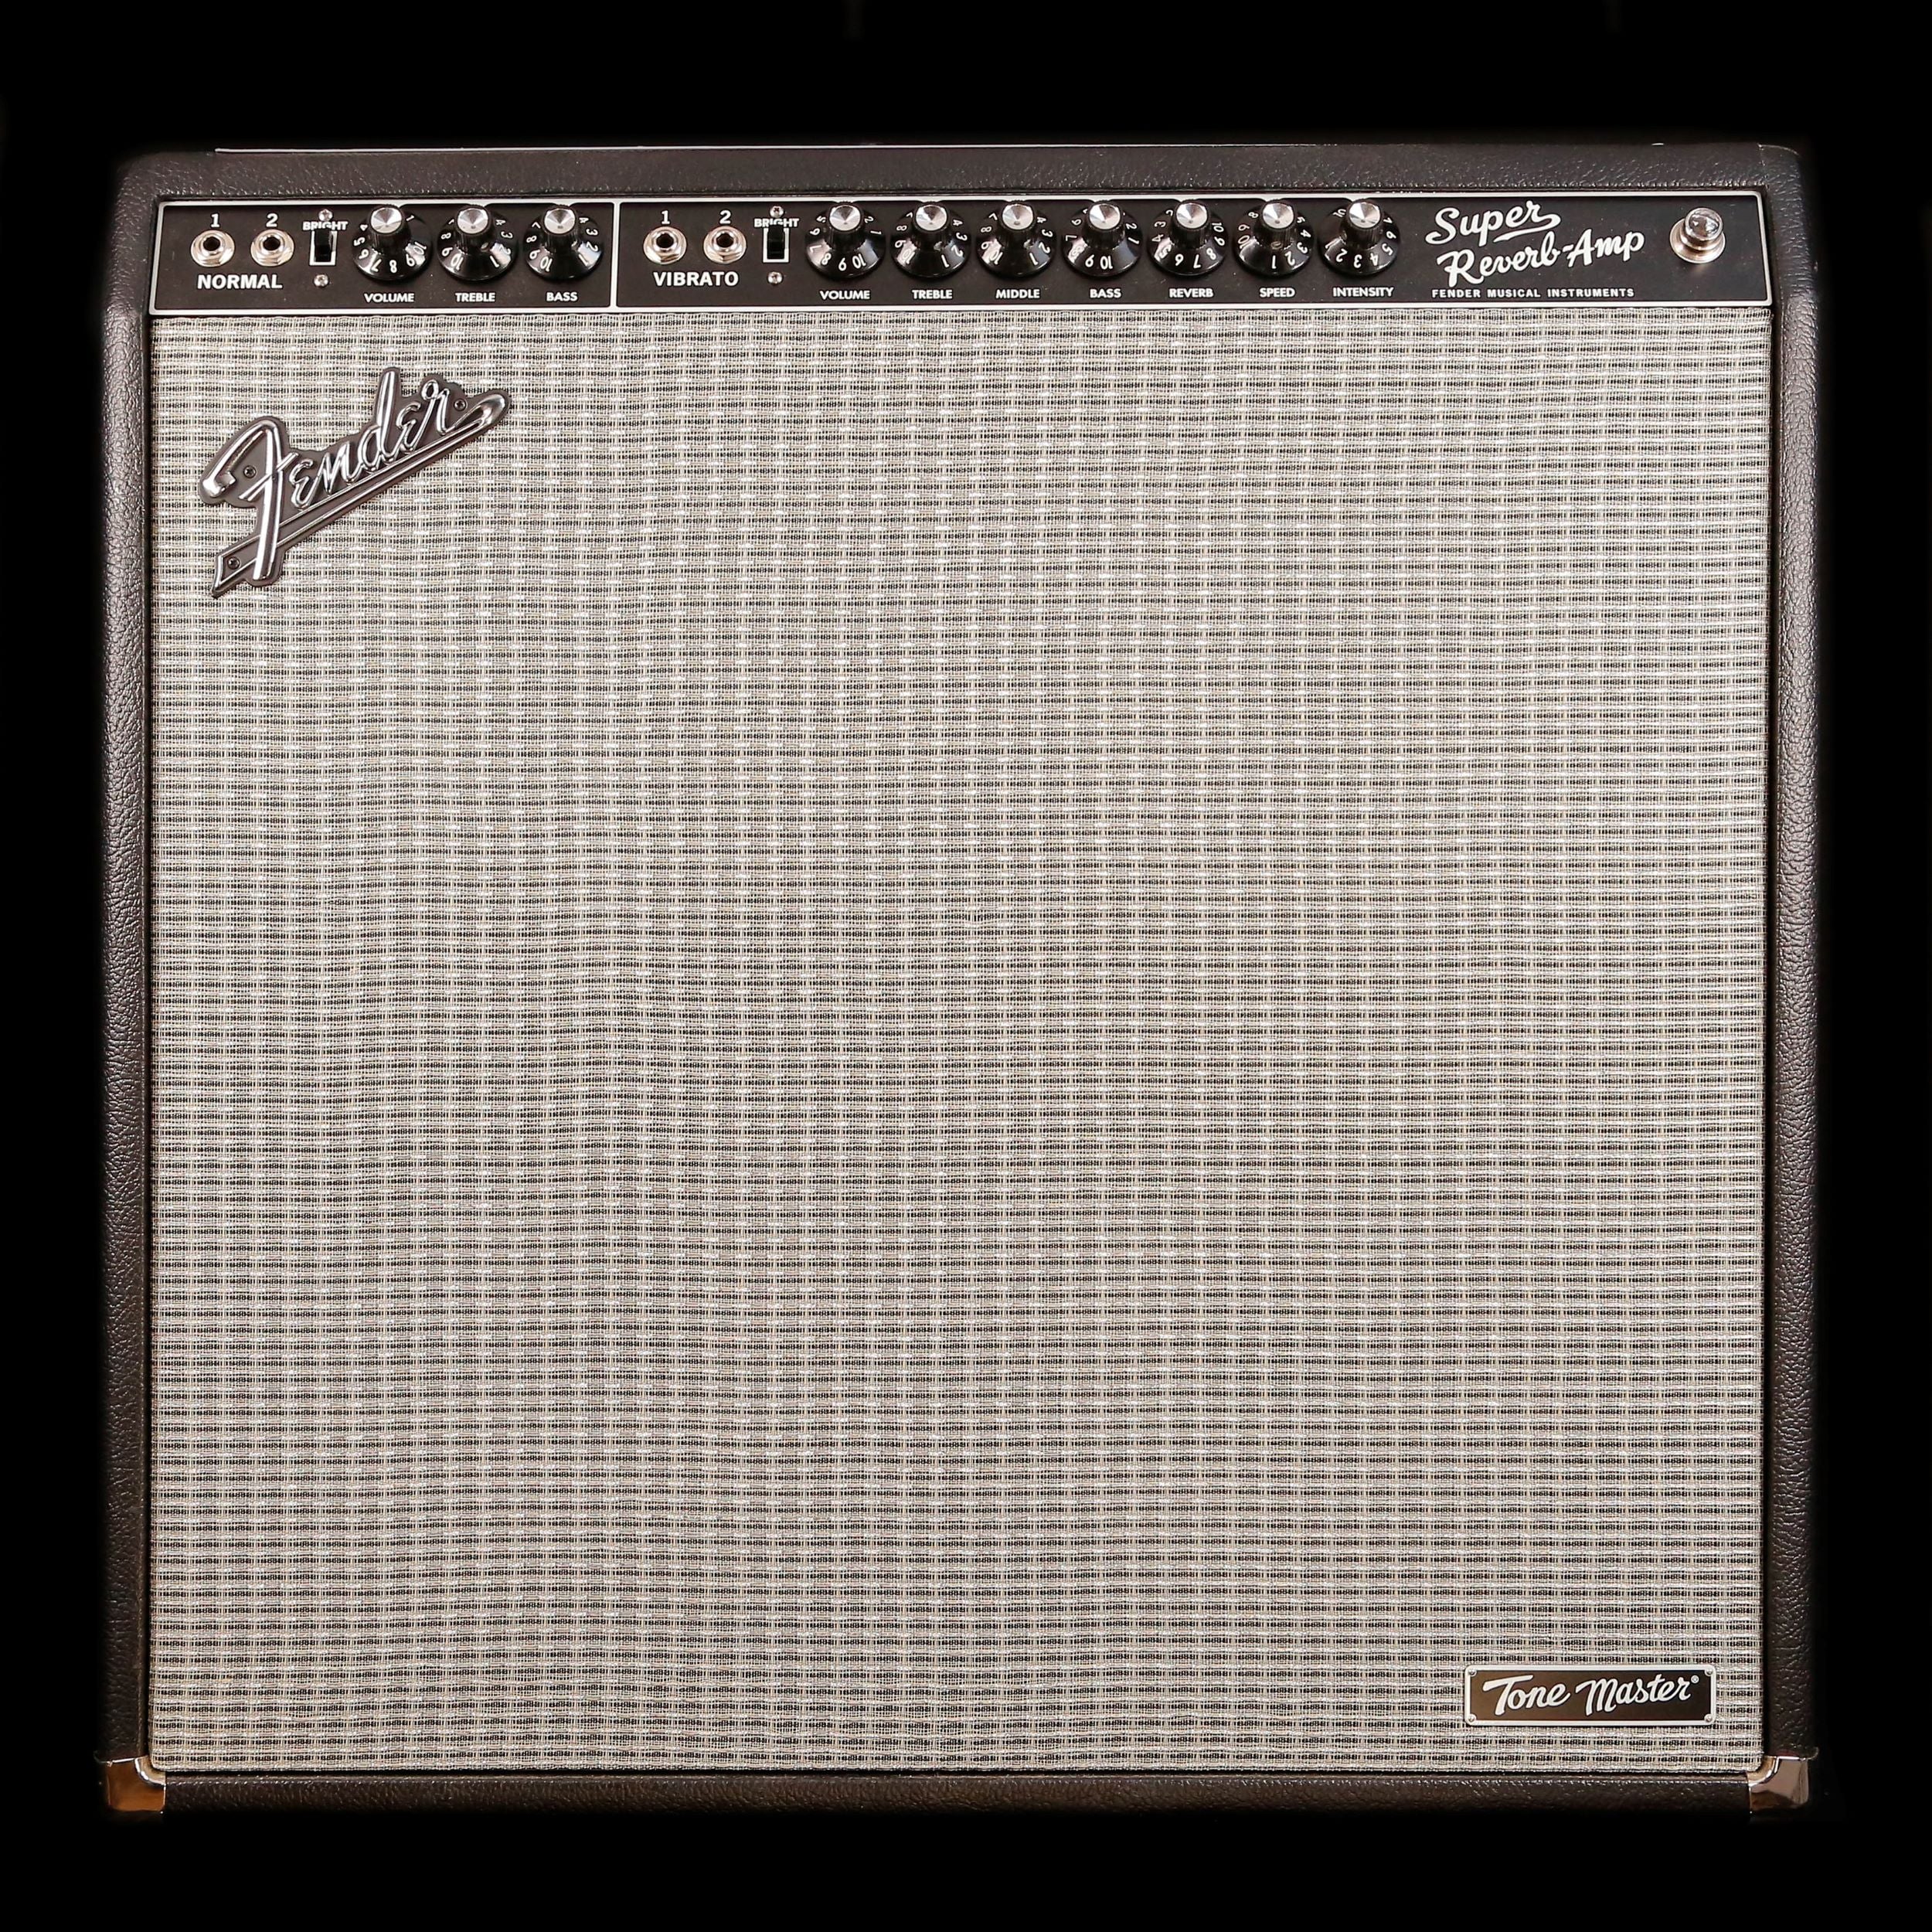 Fender Tone Master Super Reverb 4 x 10'' Combo Guitar Amplifier